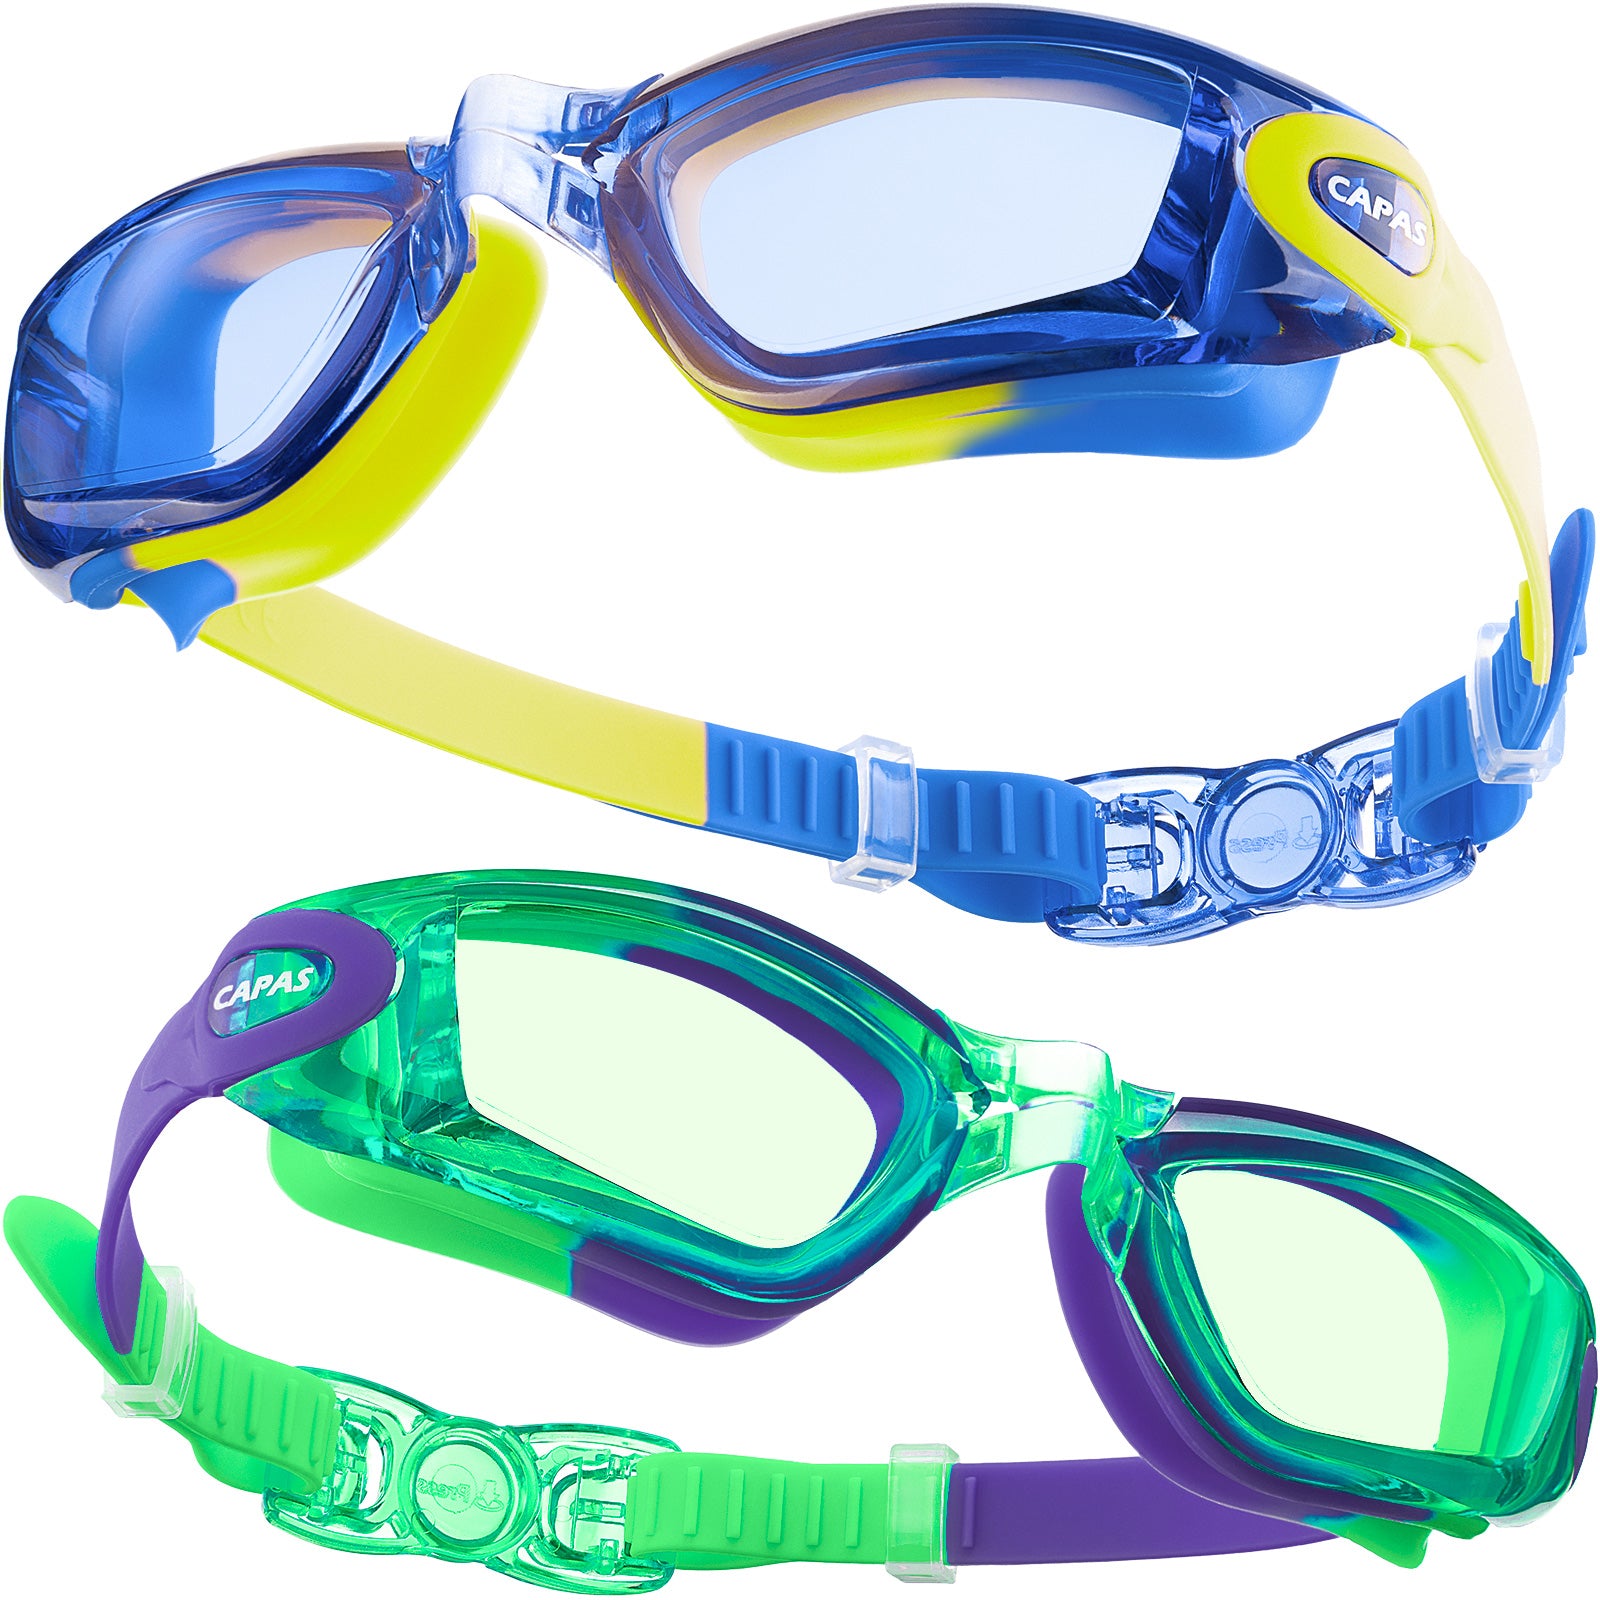 CAPAS Kids Goggles, 05#35